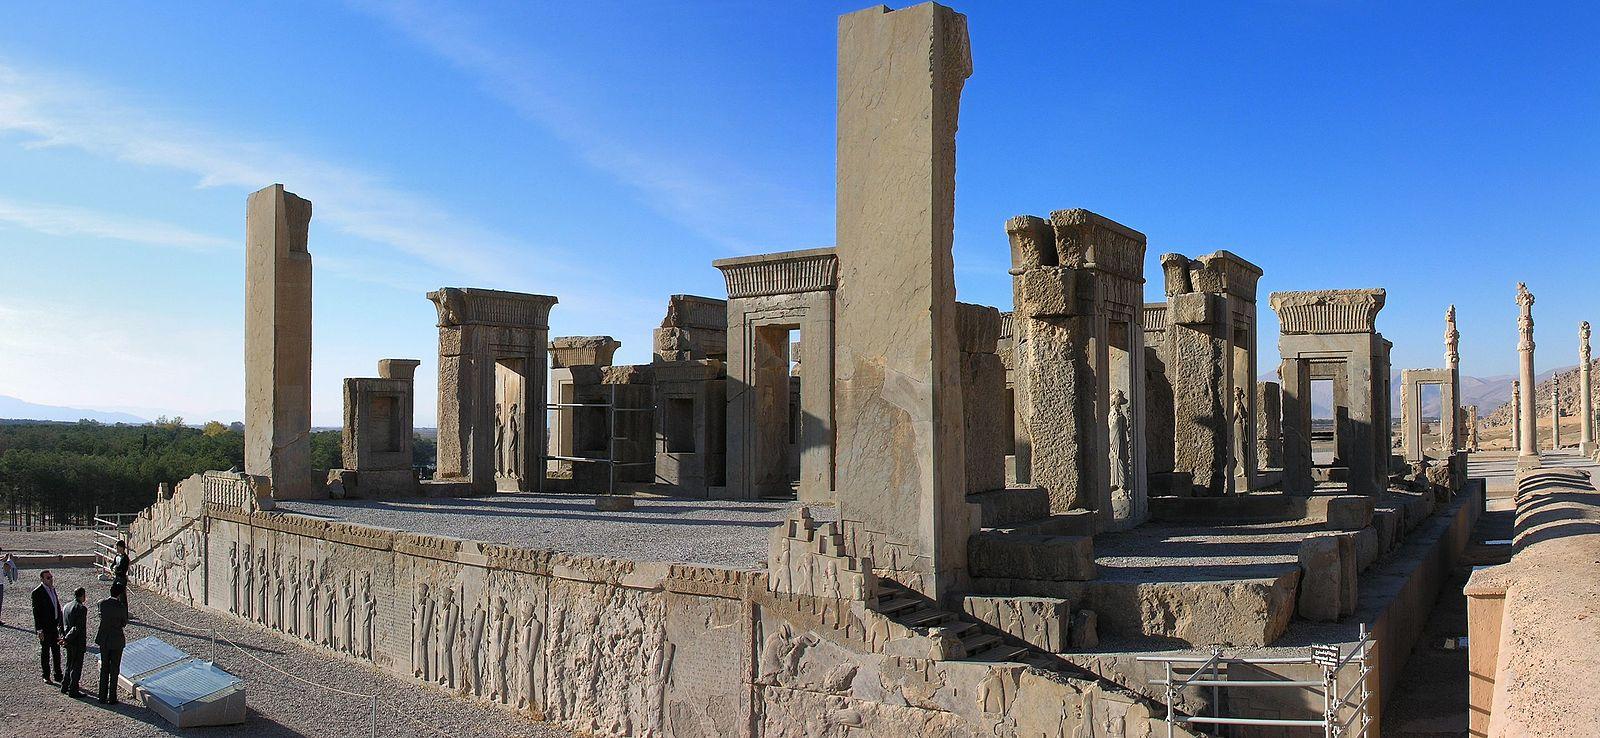 Entrance to Persepolis 